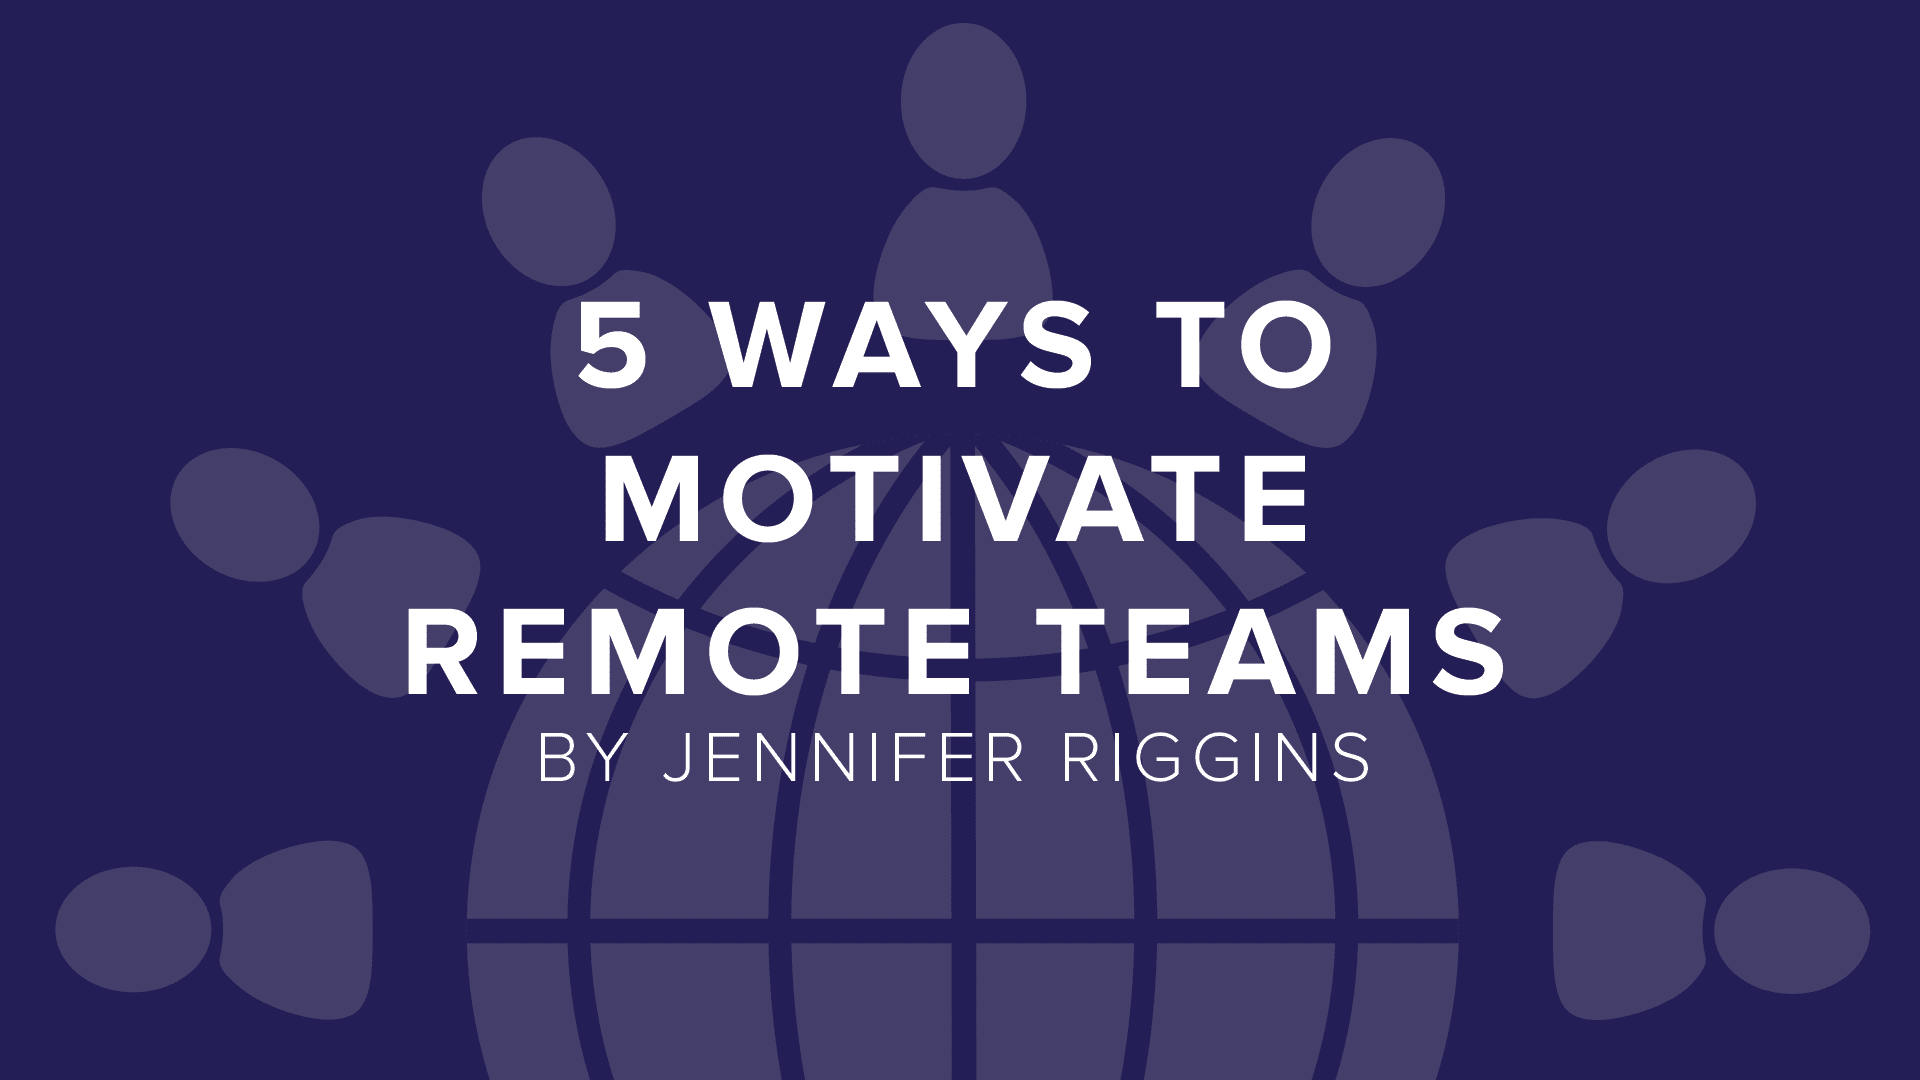 DigitalChalk: 5 Ways to Motivate Remote Teams by Jennifer Riggins